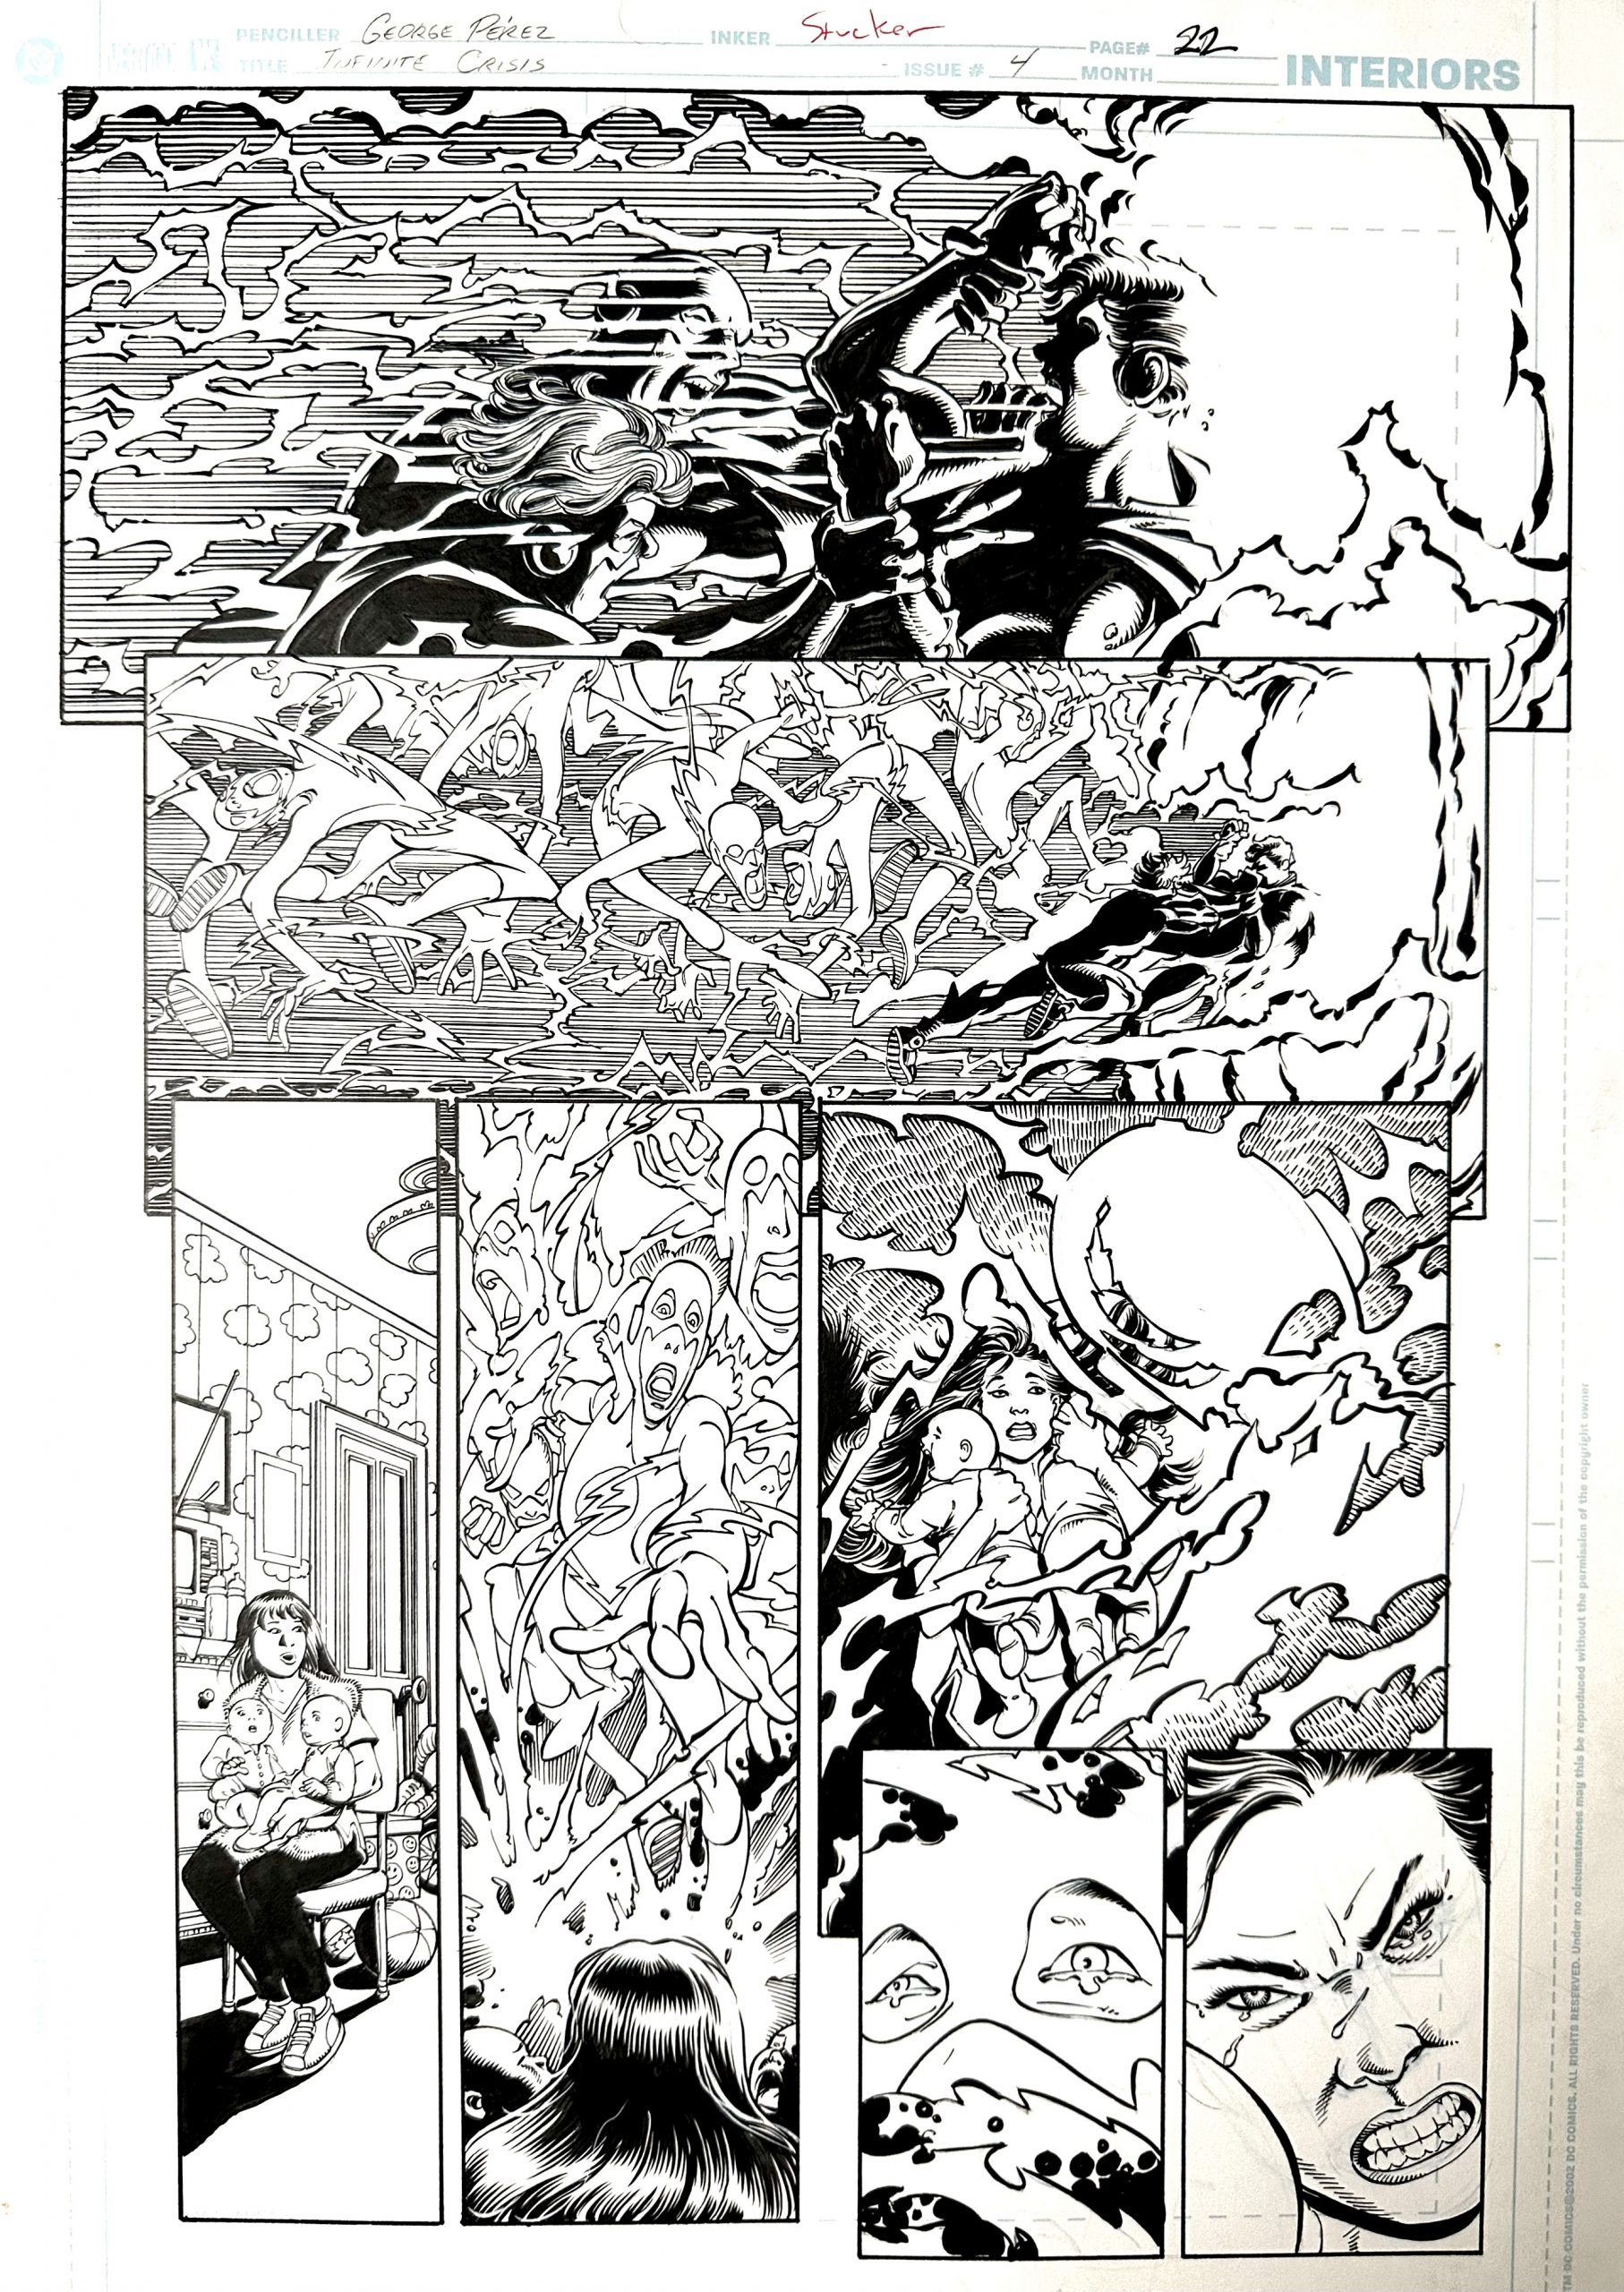 Infinite crisis issue 4 page 22 - original artwork